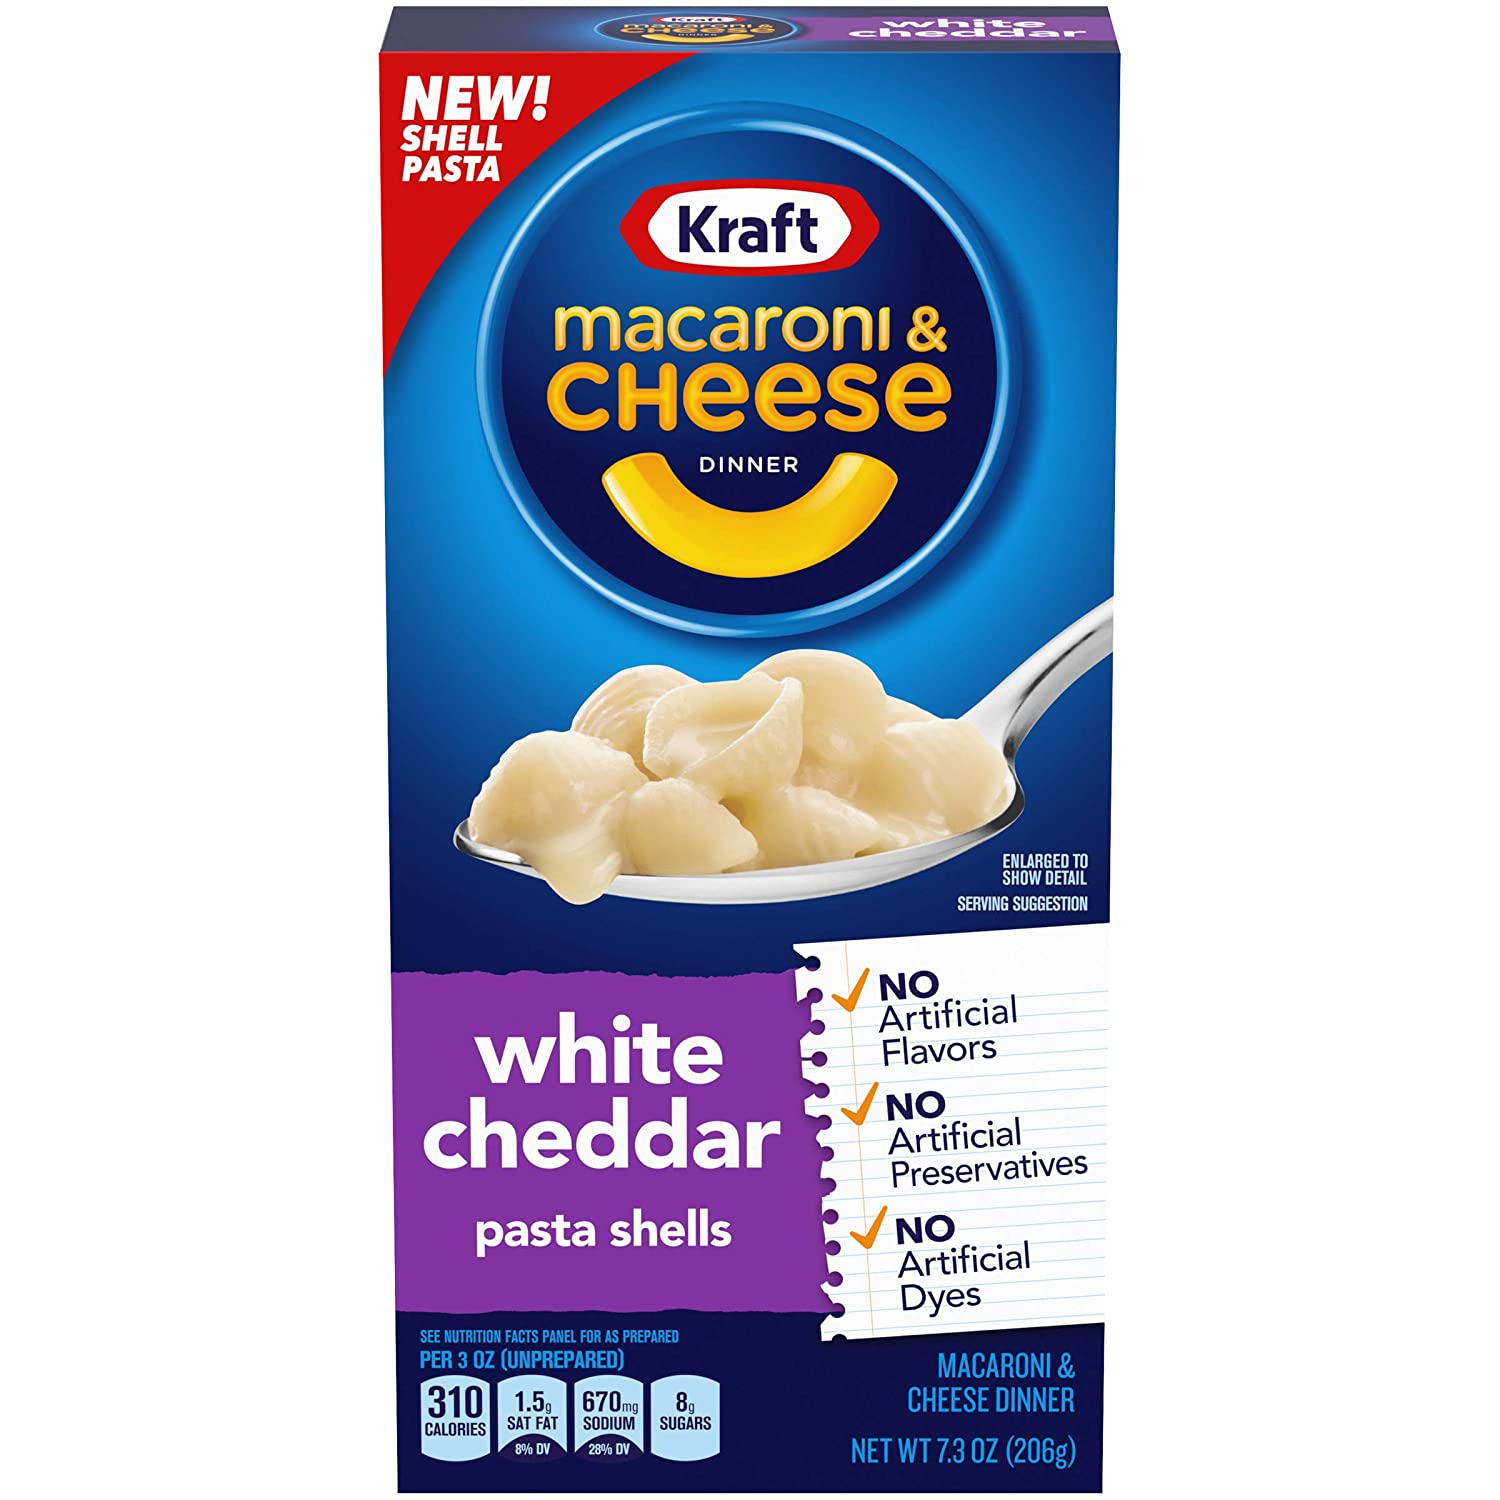 Kraft White Cheddar Macaroni and Cheese Meal 7.3 oz คราฟท์มักกะโรนี